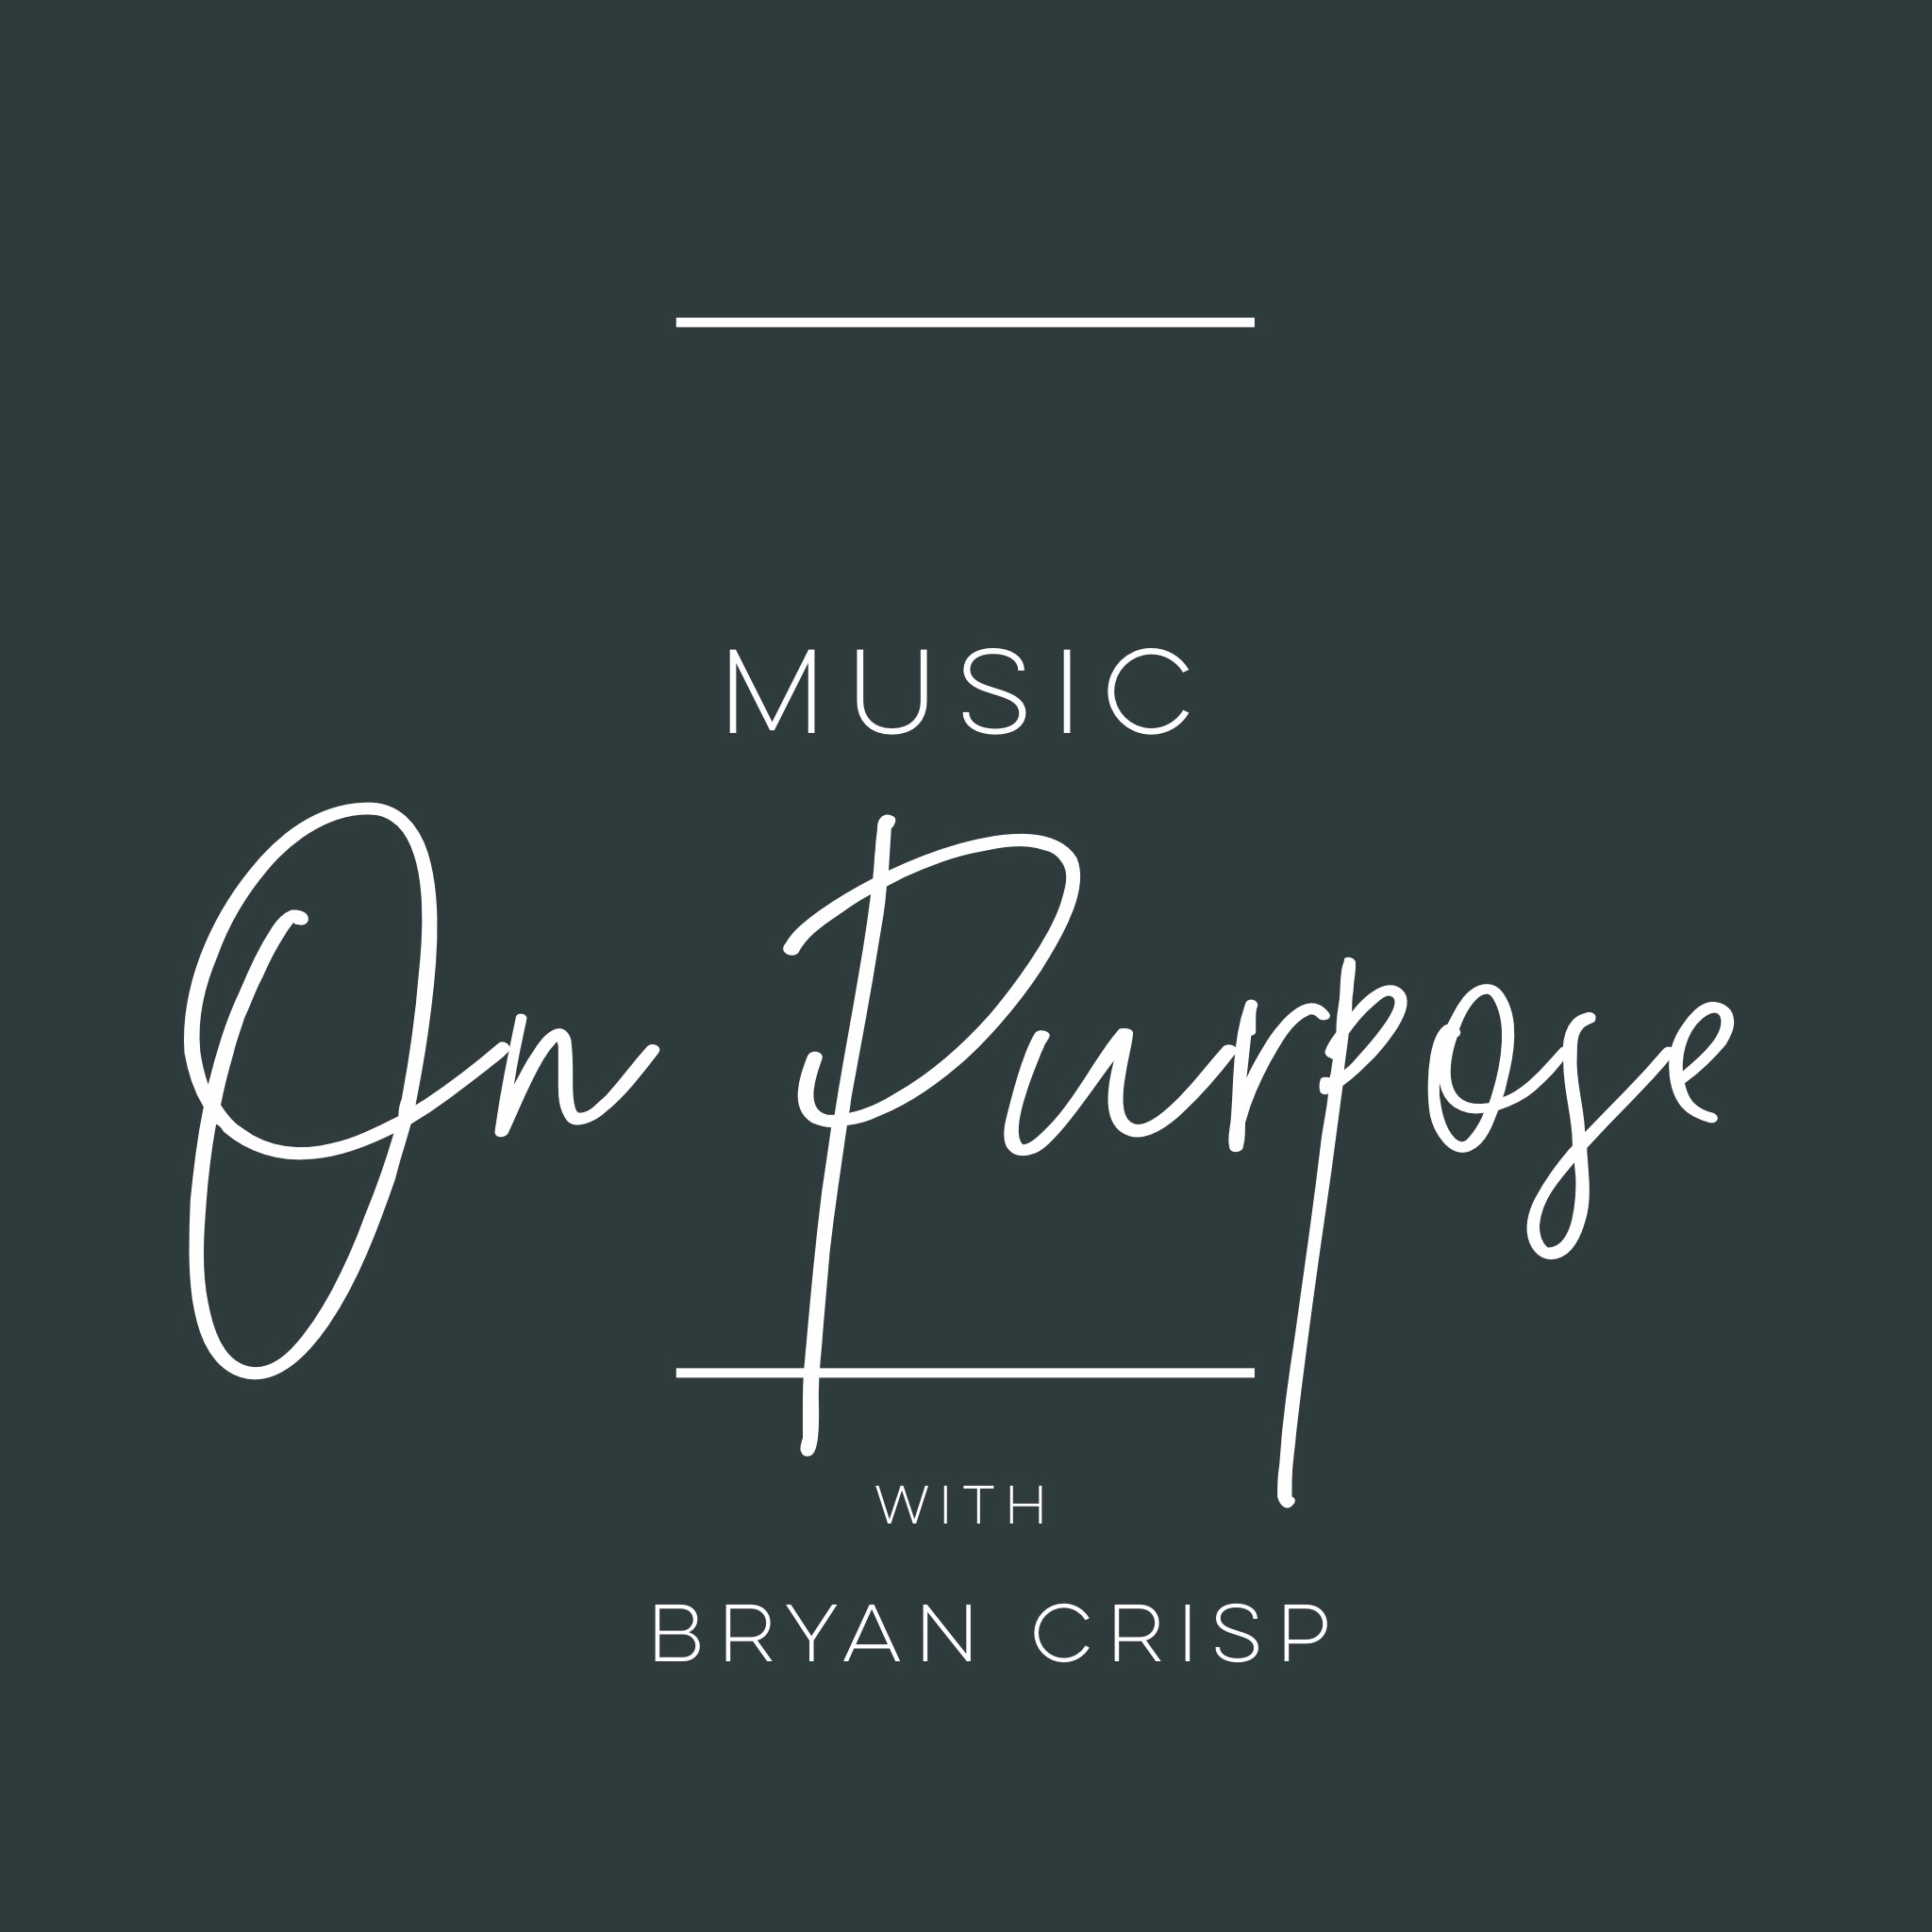 Music On Purpose